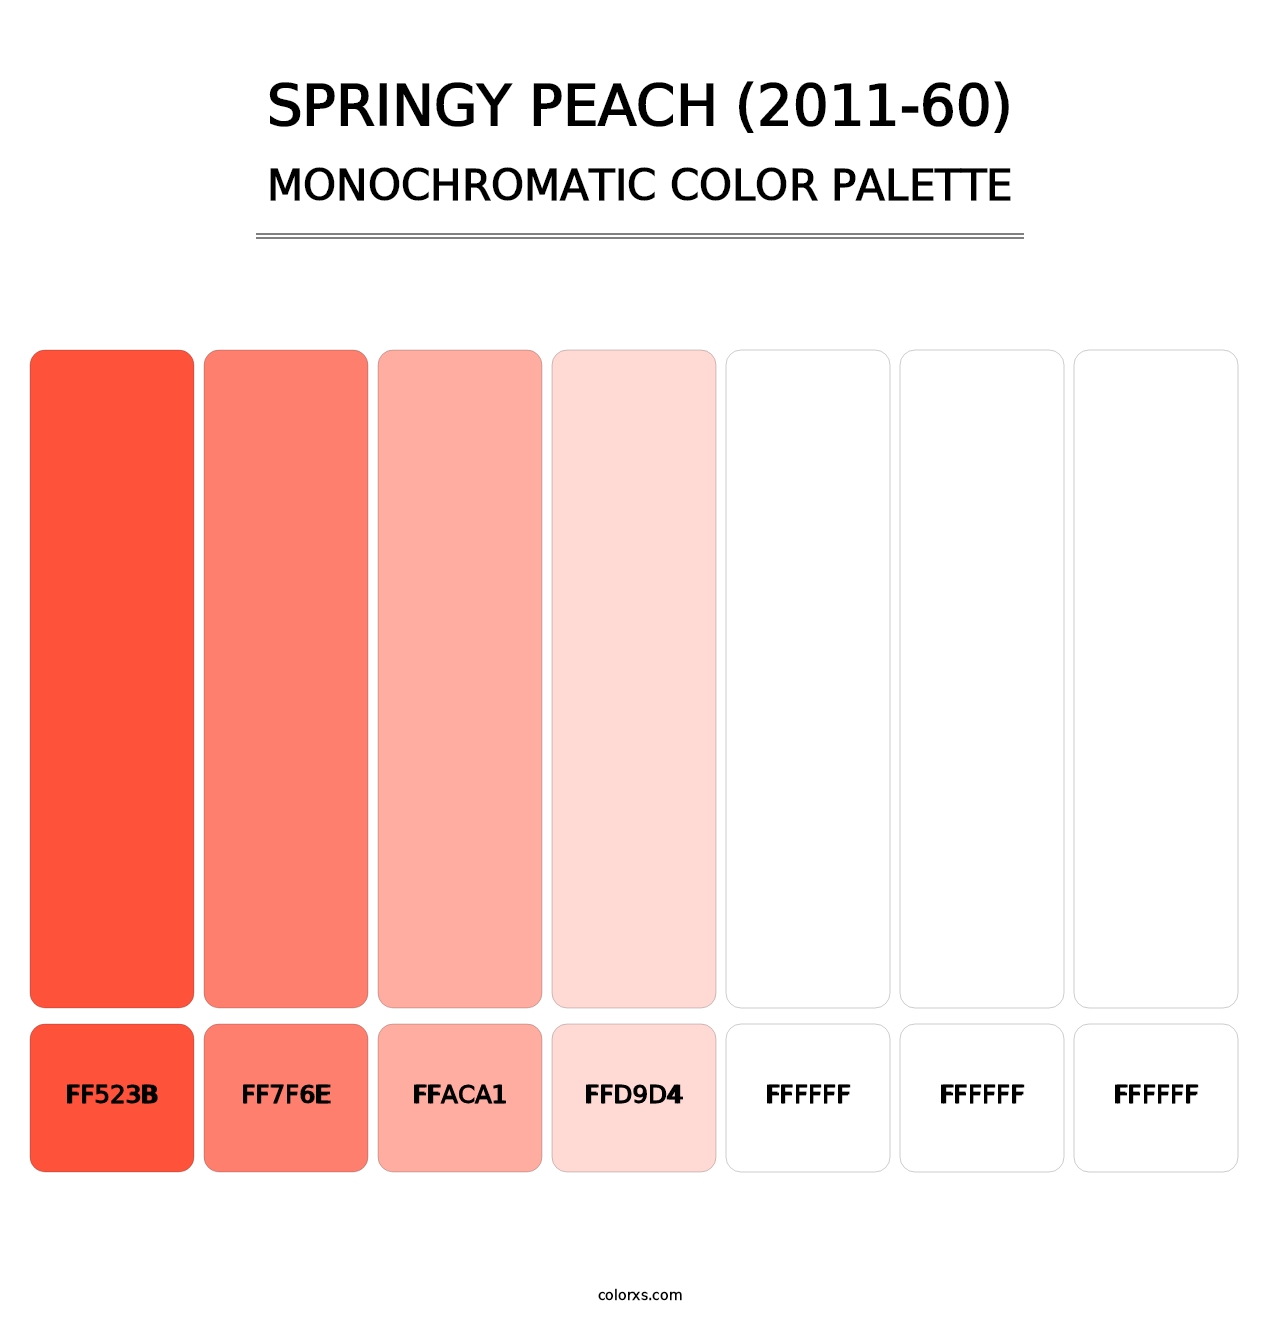 Springy Peach (2011-60) - Monochromatic Color Palette